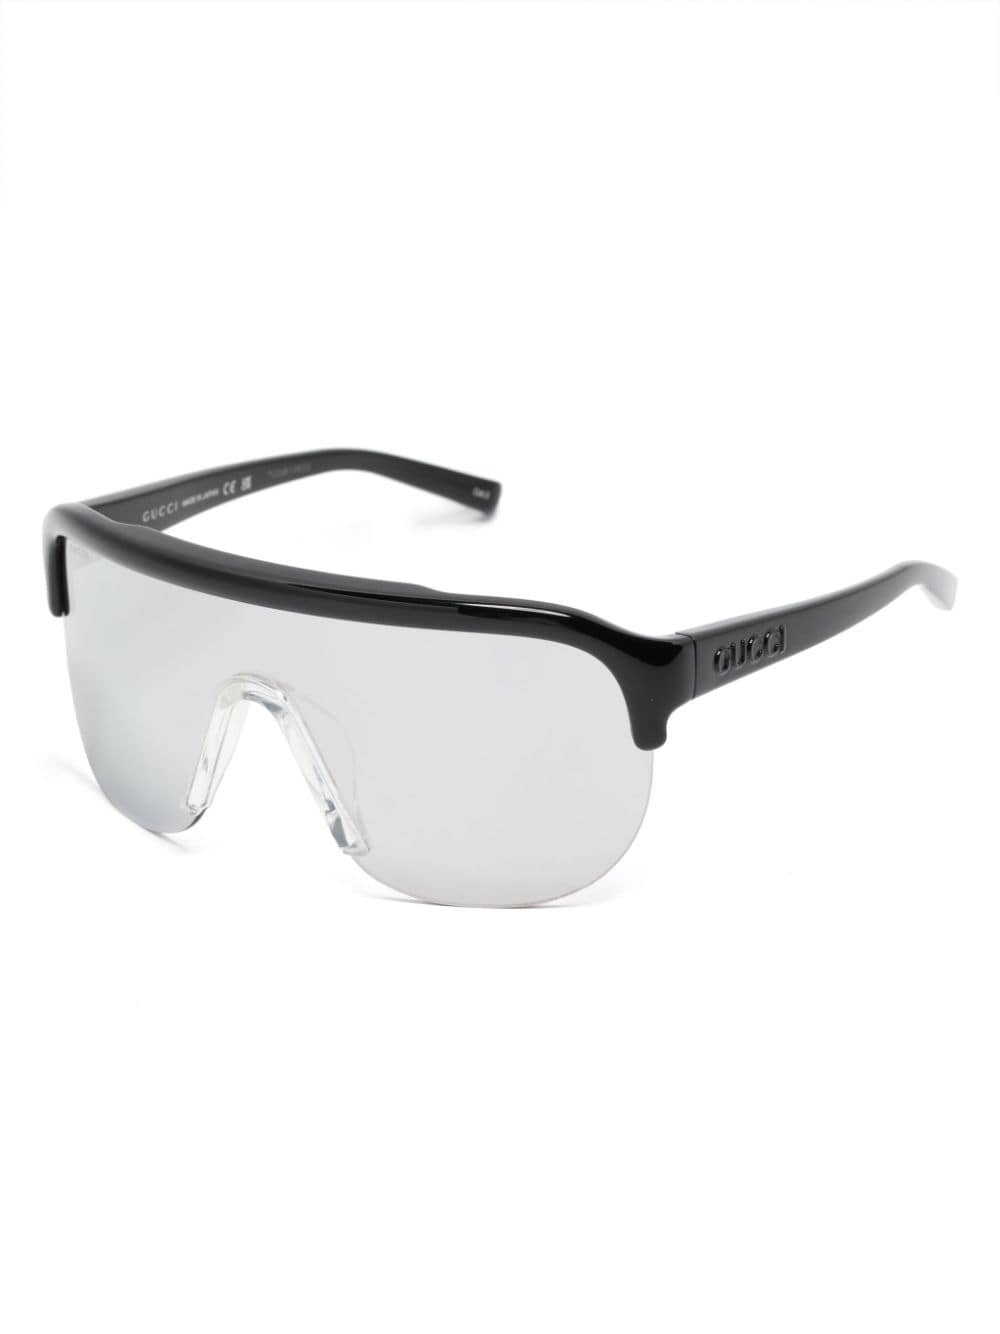 GG1645S over-sized frame sunglasses - 2